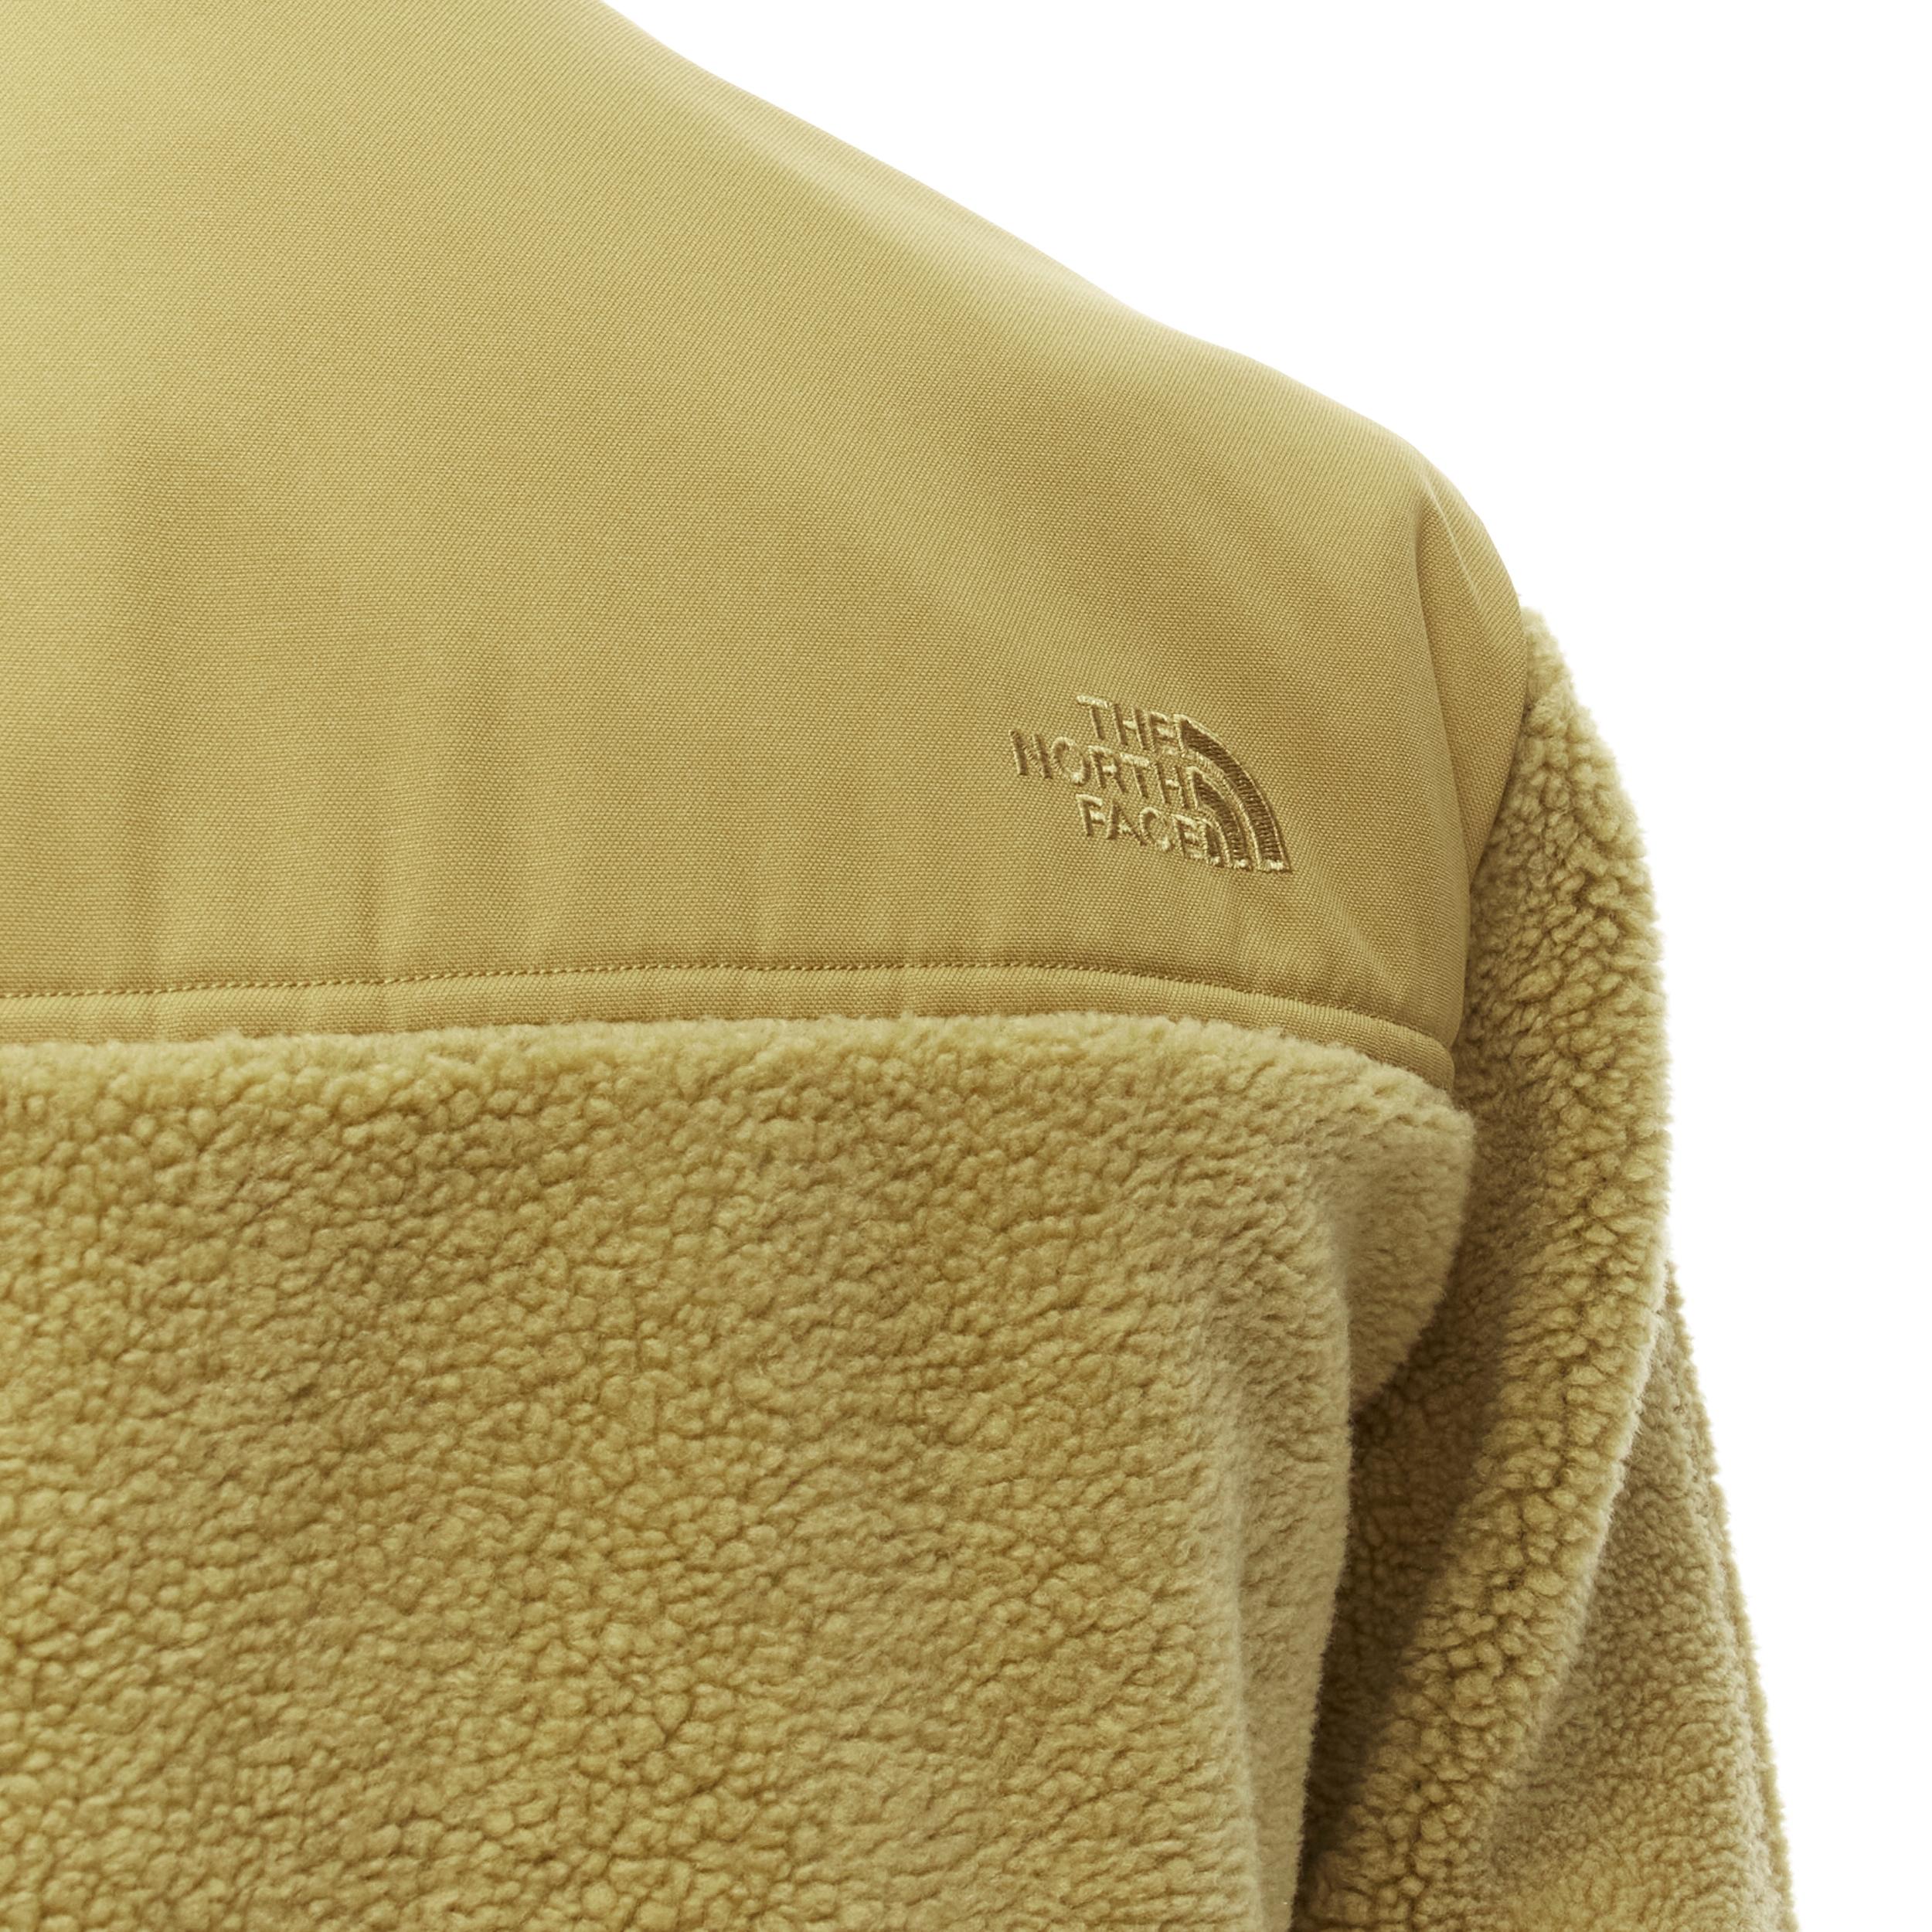 NORTH FACE tan brown fleece patch flap pocket asymmetric zip up jacket XS S For Sale 1